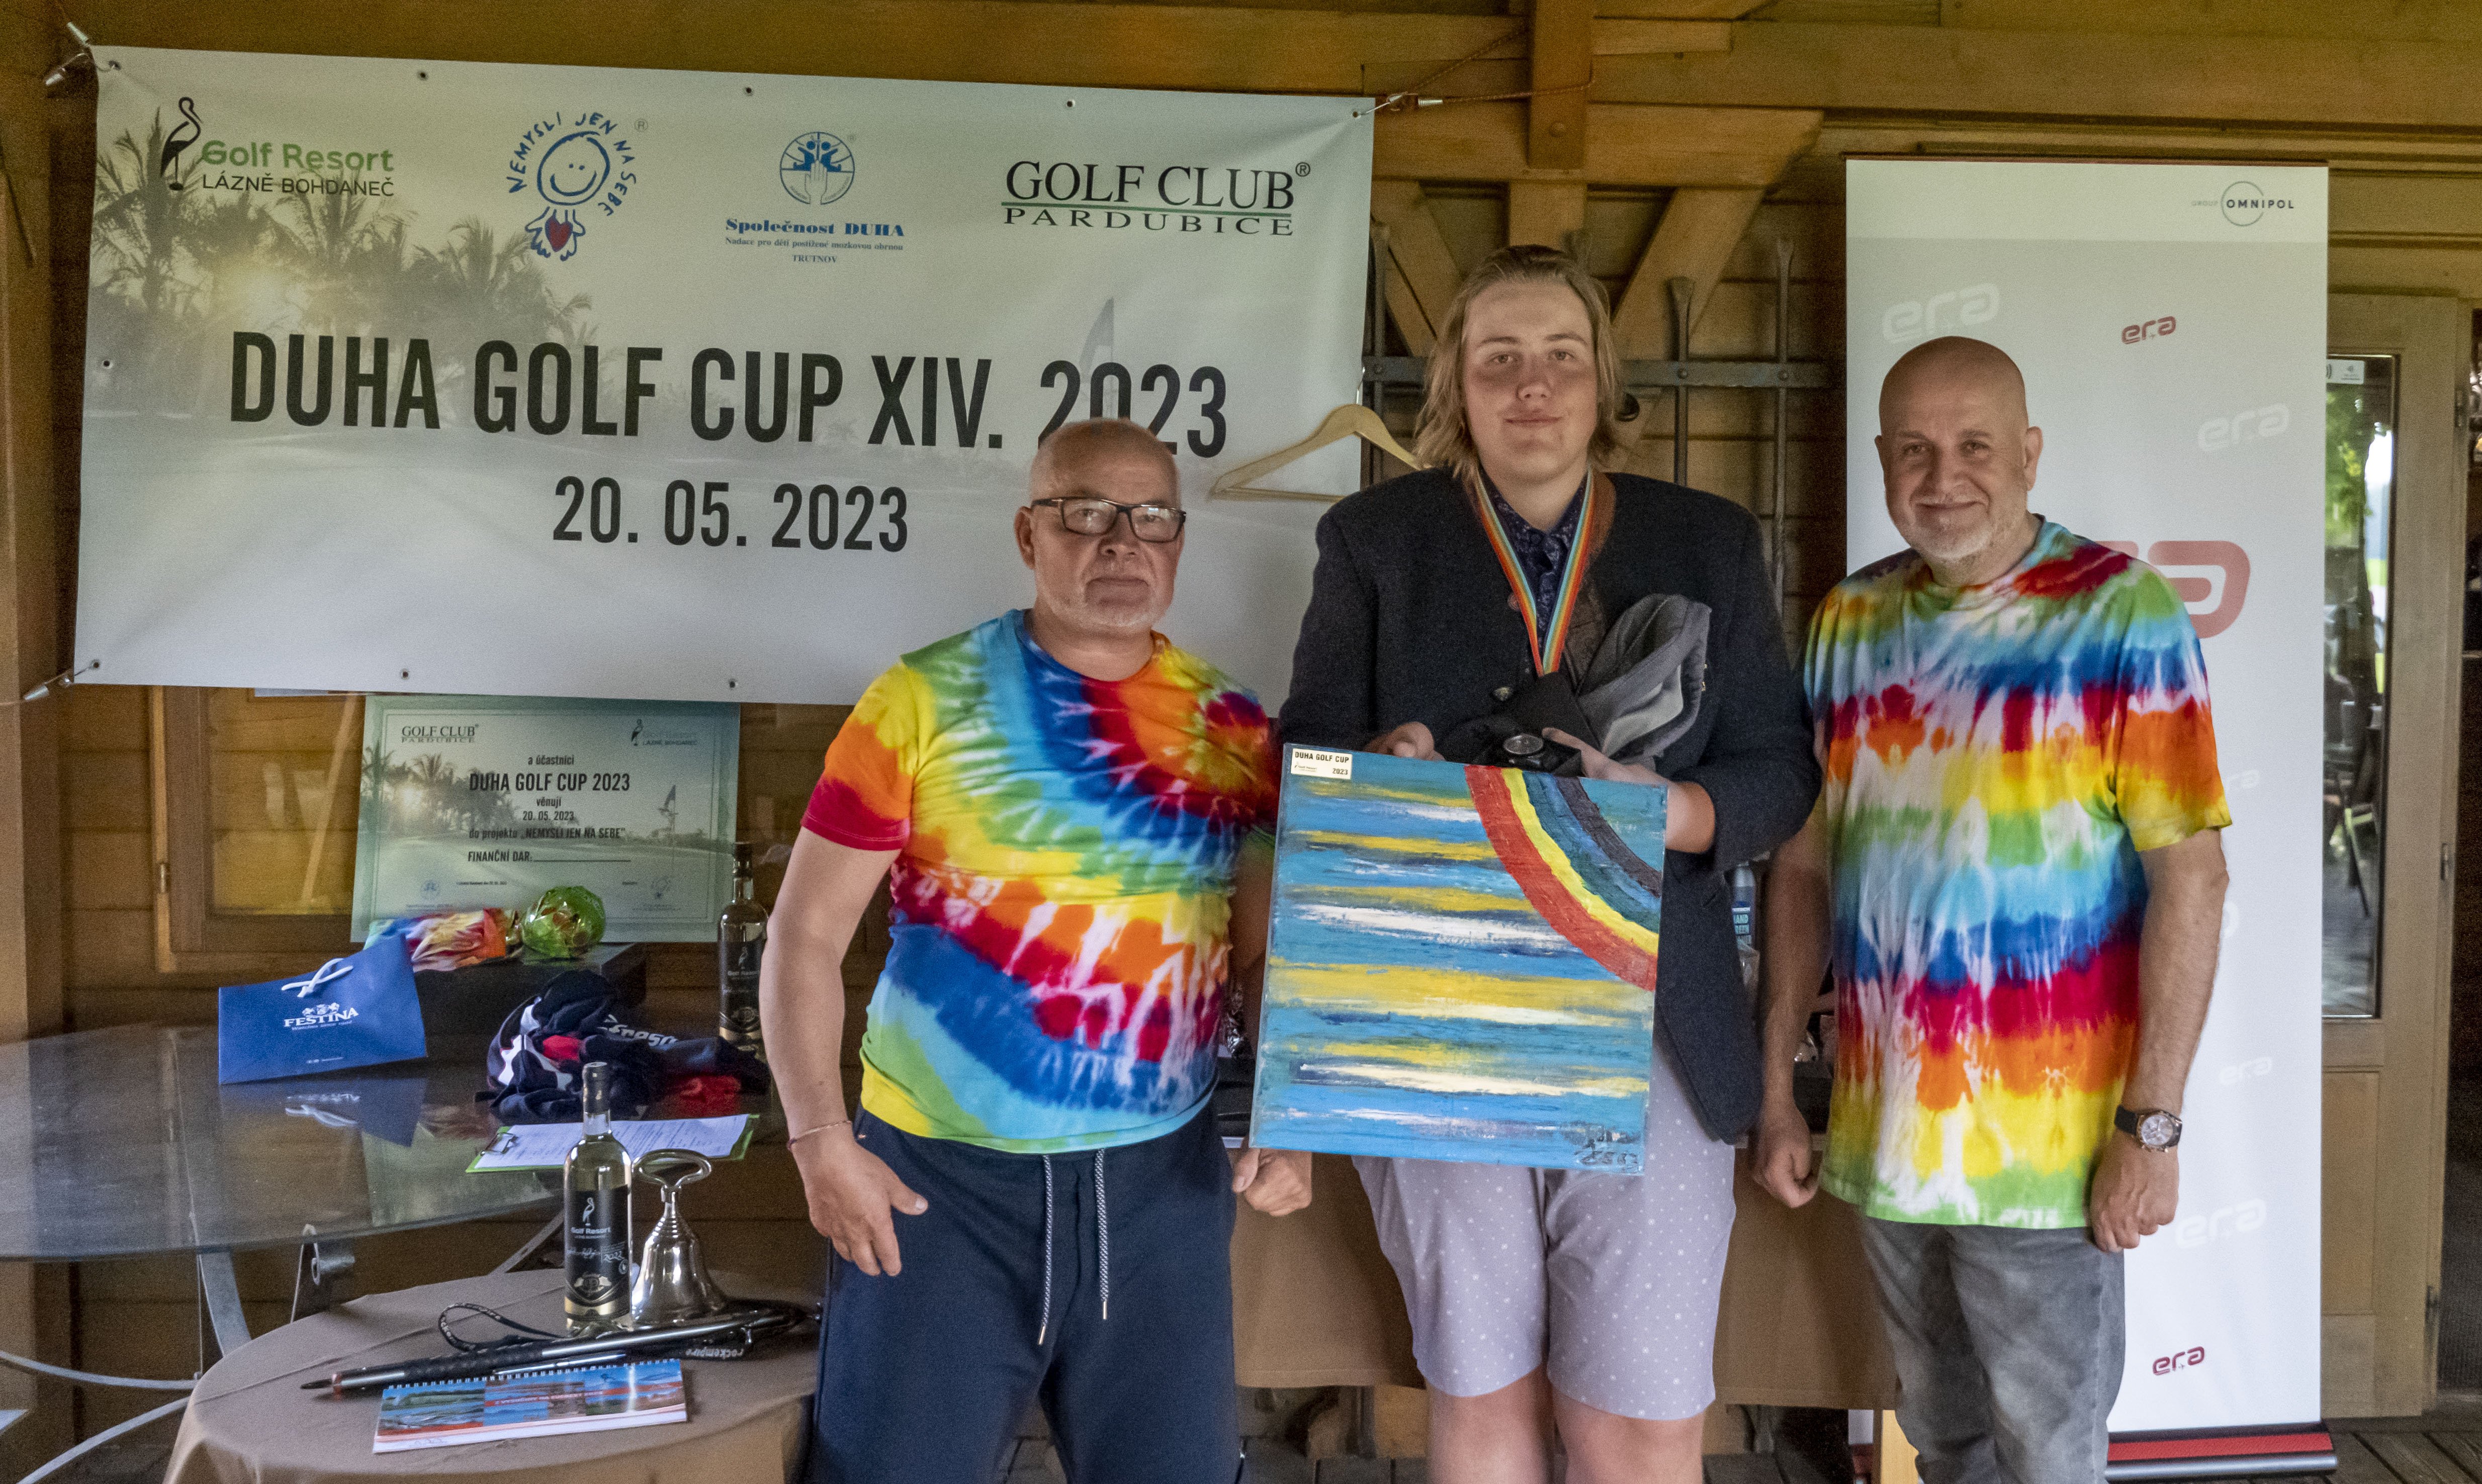 DUHA Golf Cup 2023